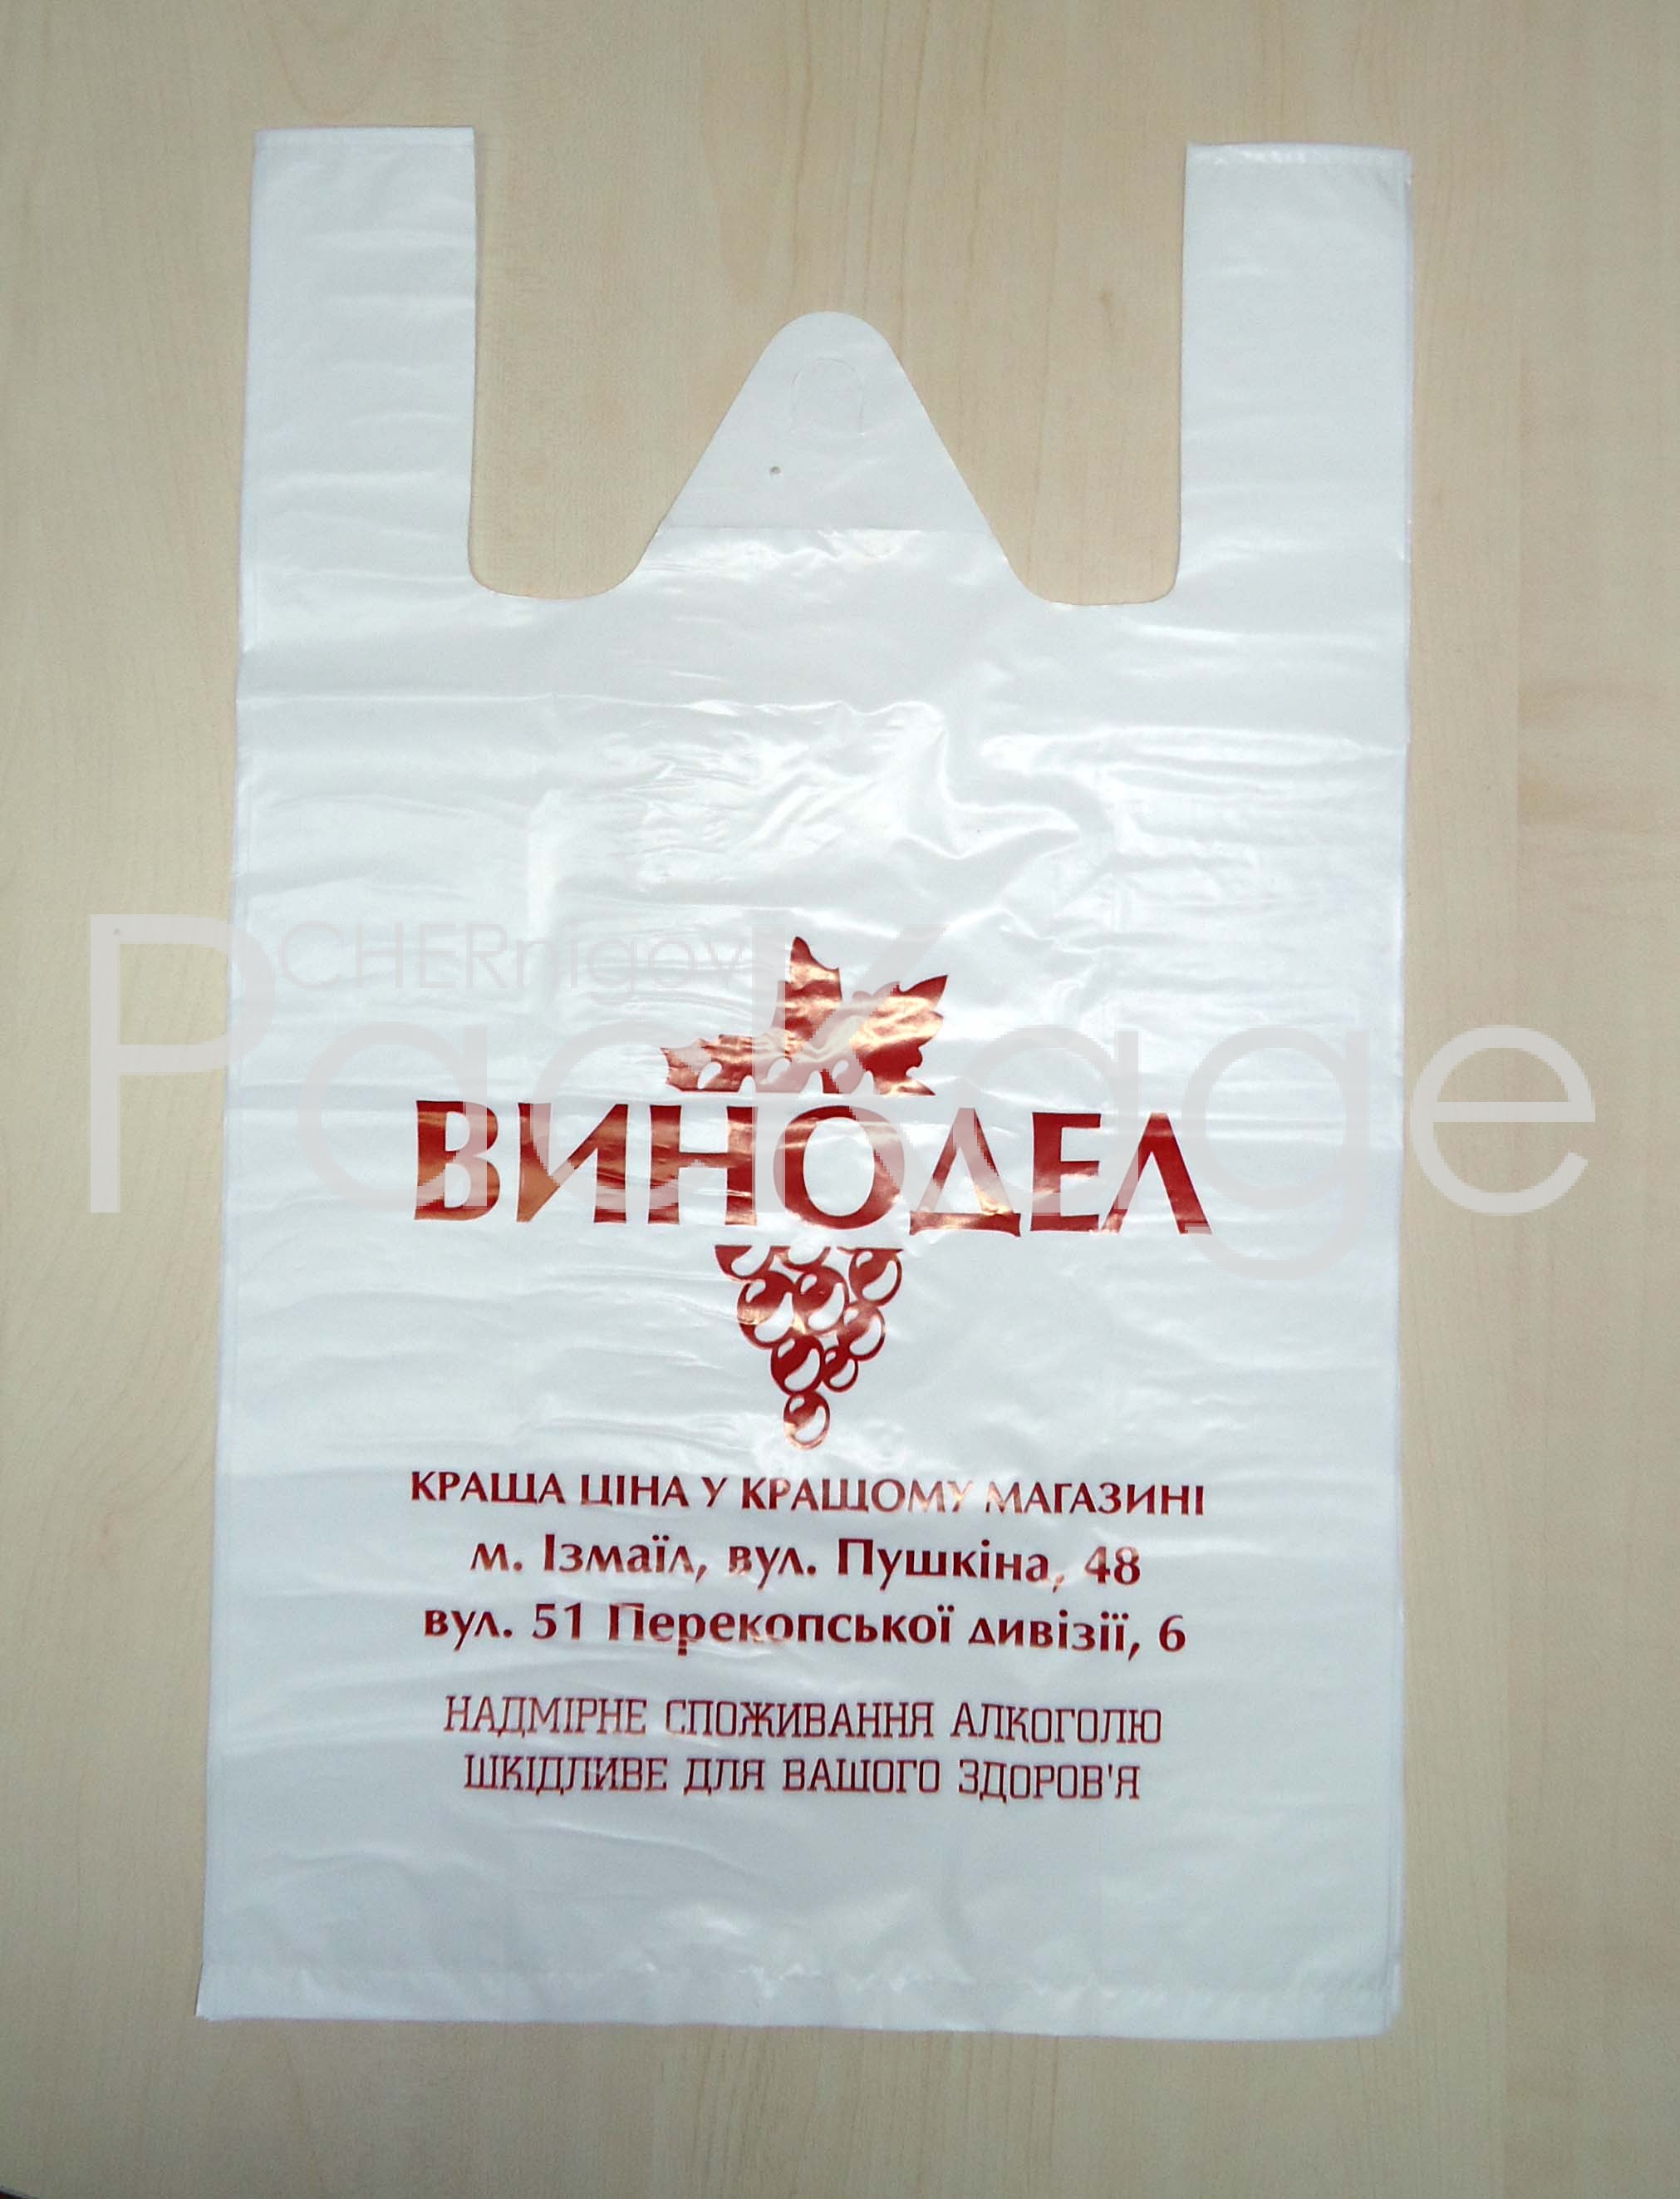 Пакеты для продажи комбикормов и добавок Chernigov Package - Photo DSC03512